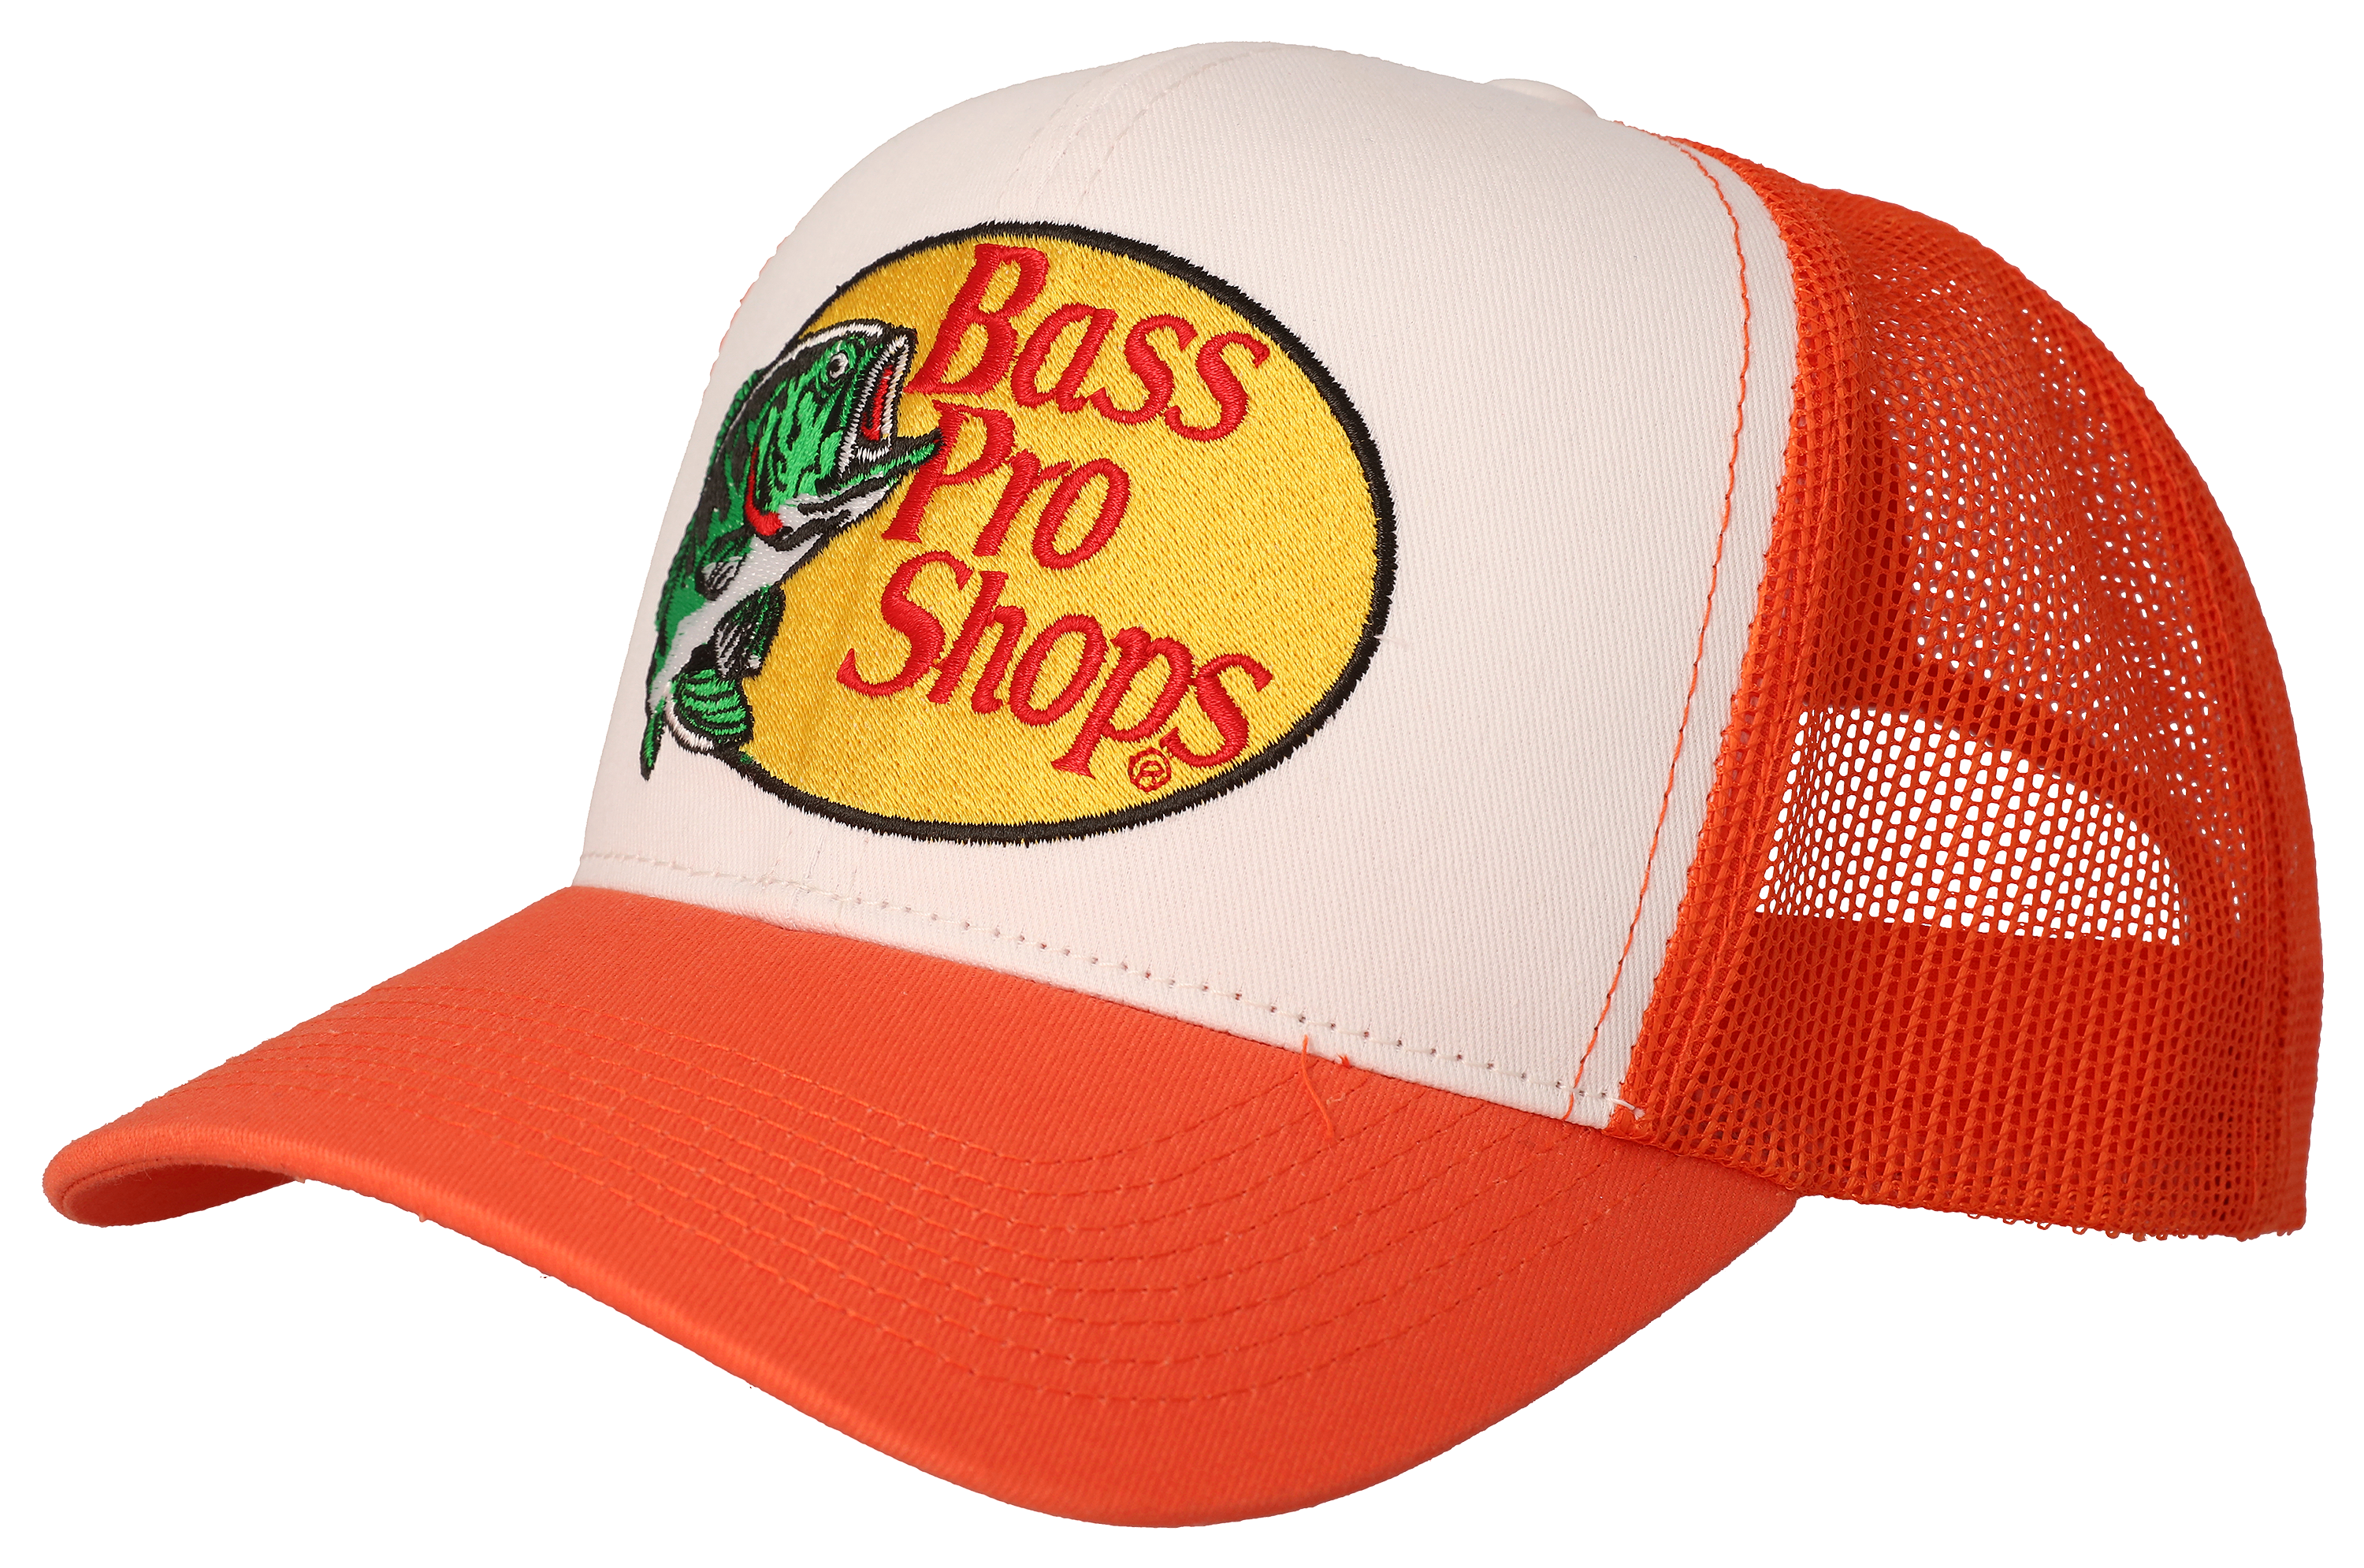 Bass Pro Shops Hat Mens Green Snapback Trucker Cap Sport Fishing